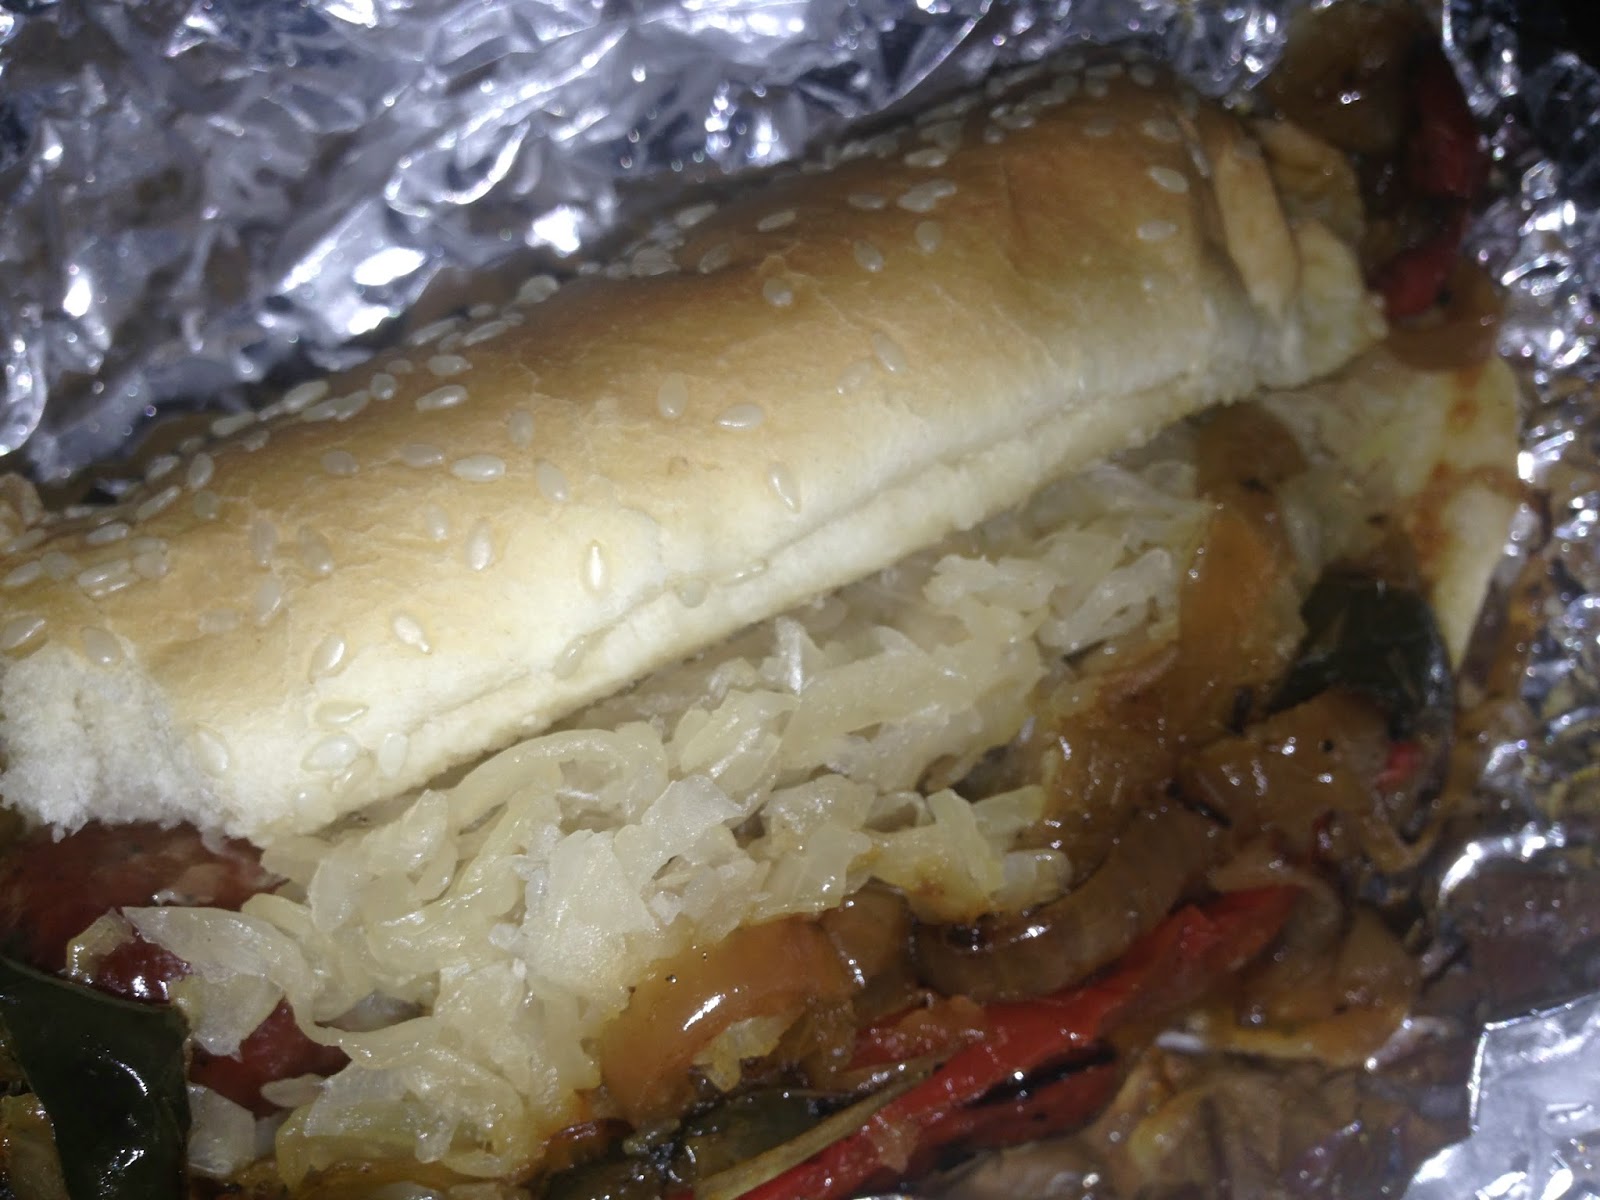 Way Good Serva-Teria Food Truck, Houston TX - Jalapeno Smoked-beef sausage sandwich